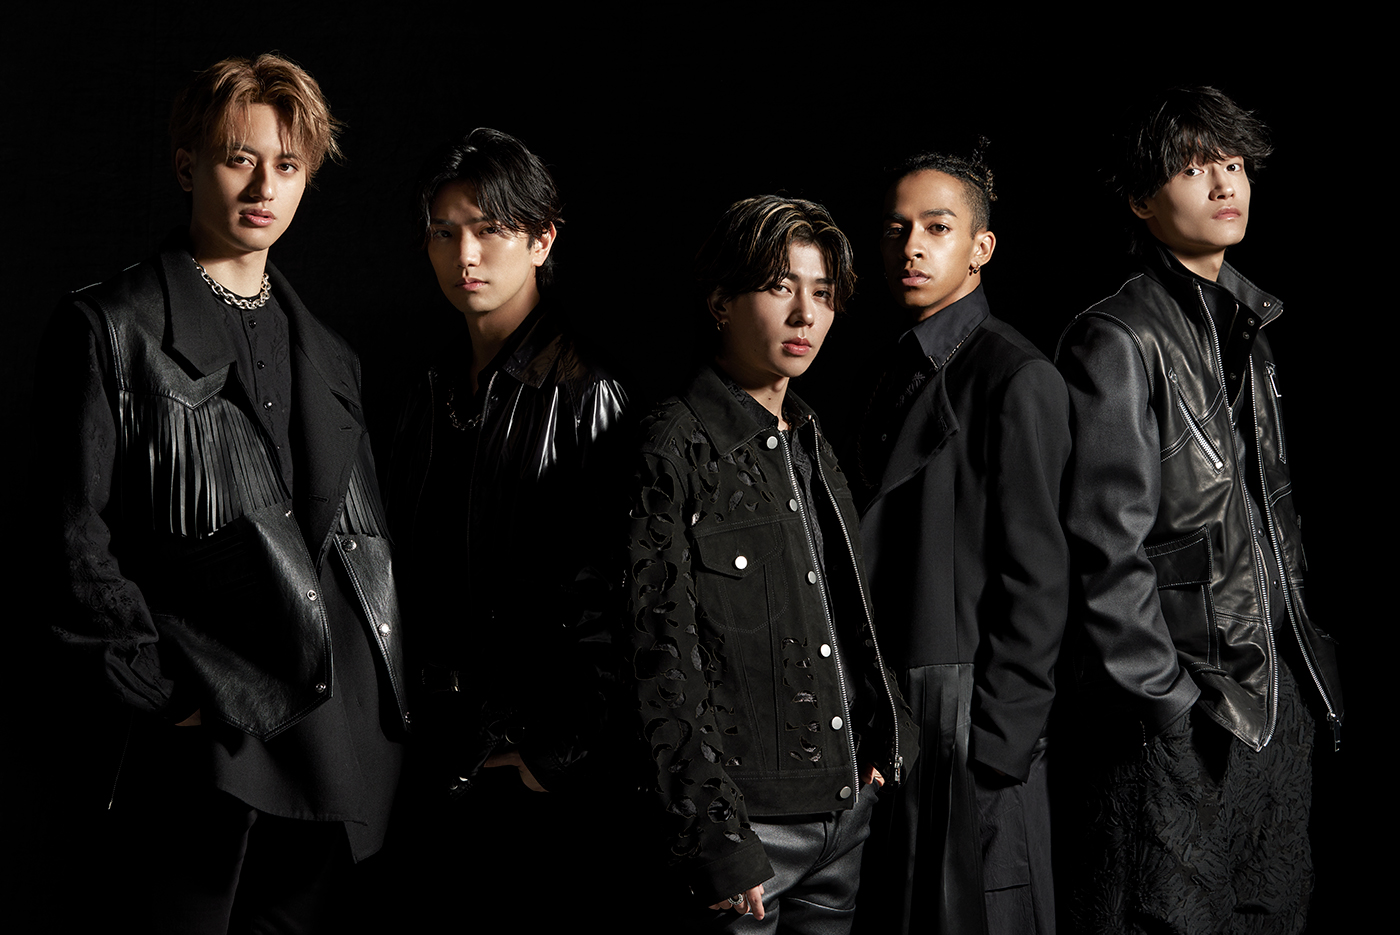 Aぇ! groupデビューシングル「《A》BEGINNING」のMVプレミア公開が決定！メンバーソロシーンティザーも公開 - 画像一覧（1/1）